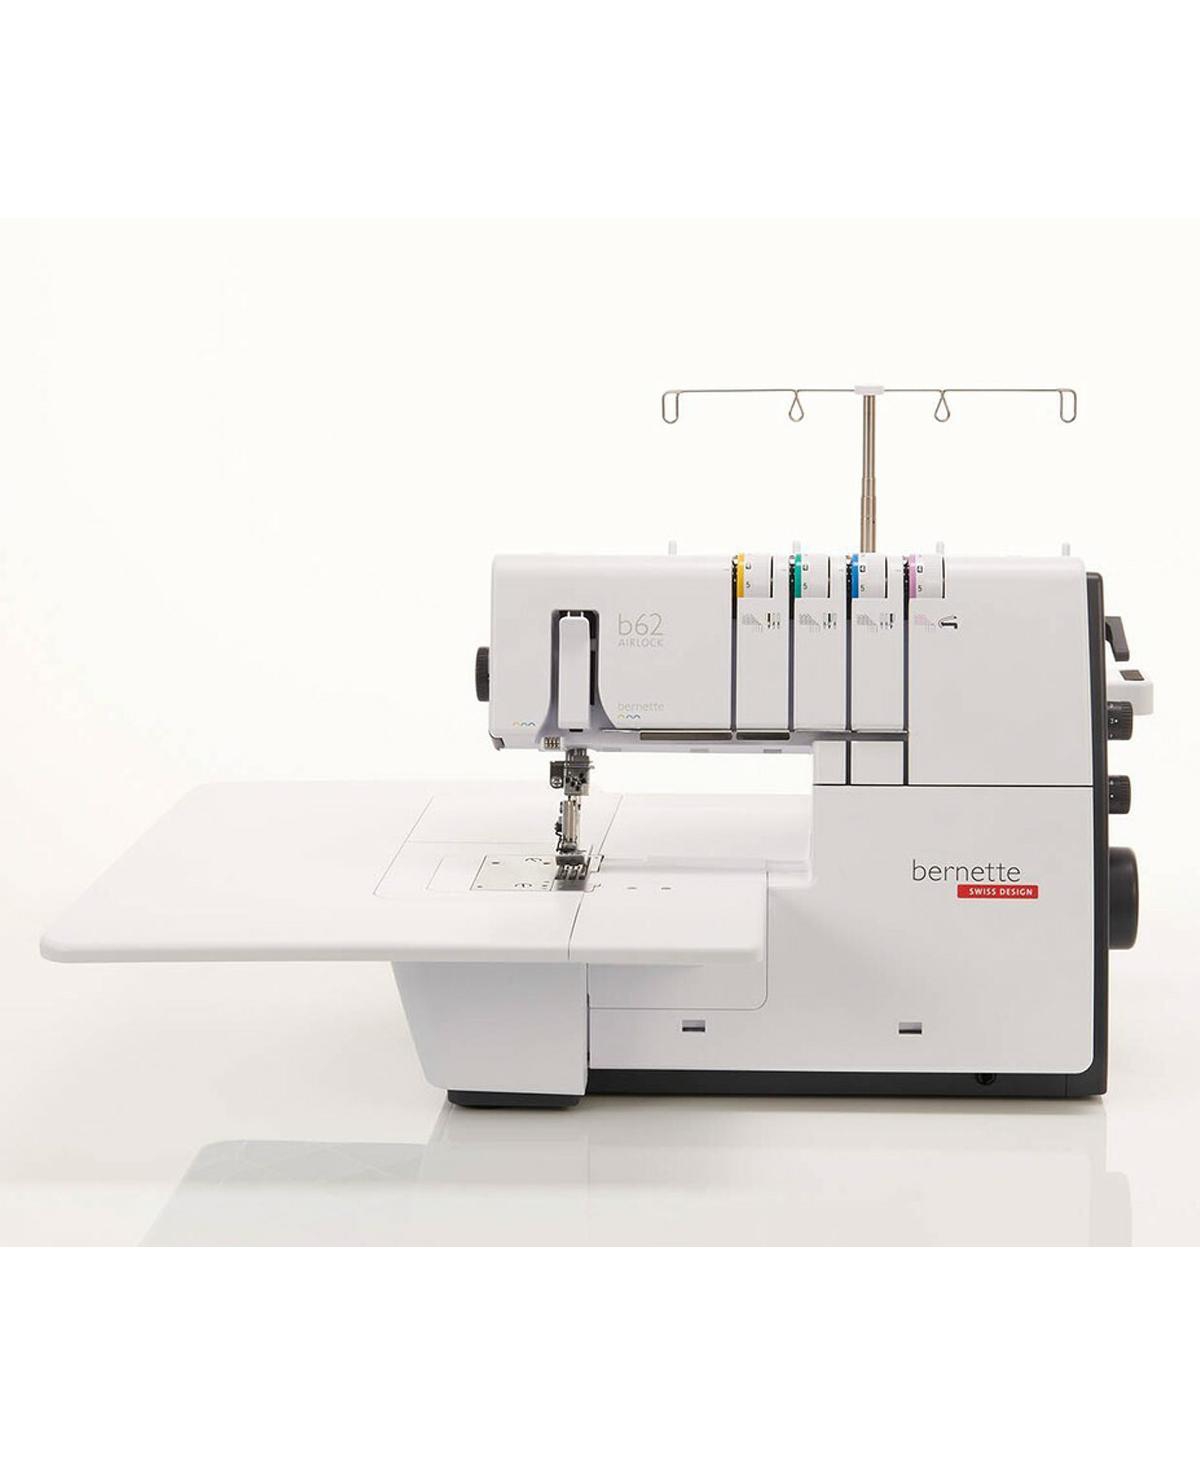 b62 Swiss Design Airlock Coverstitch Sewing Machine - White